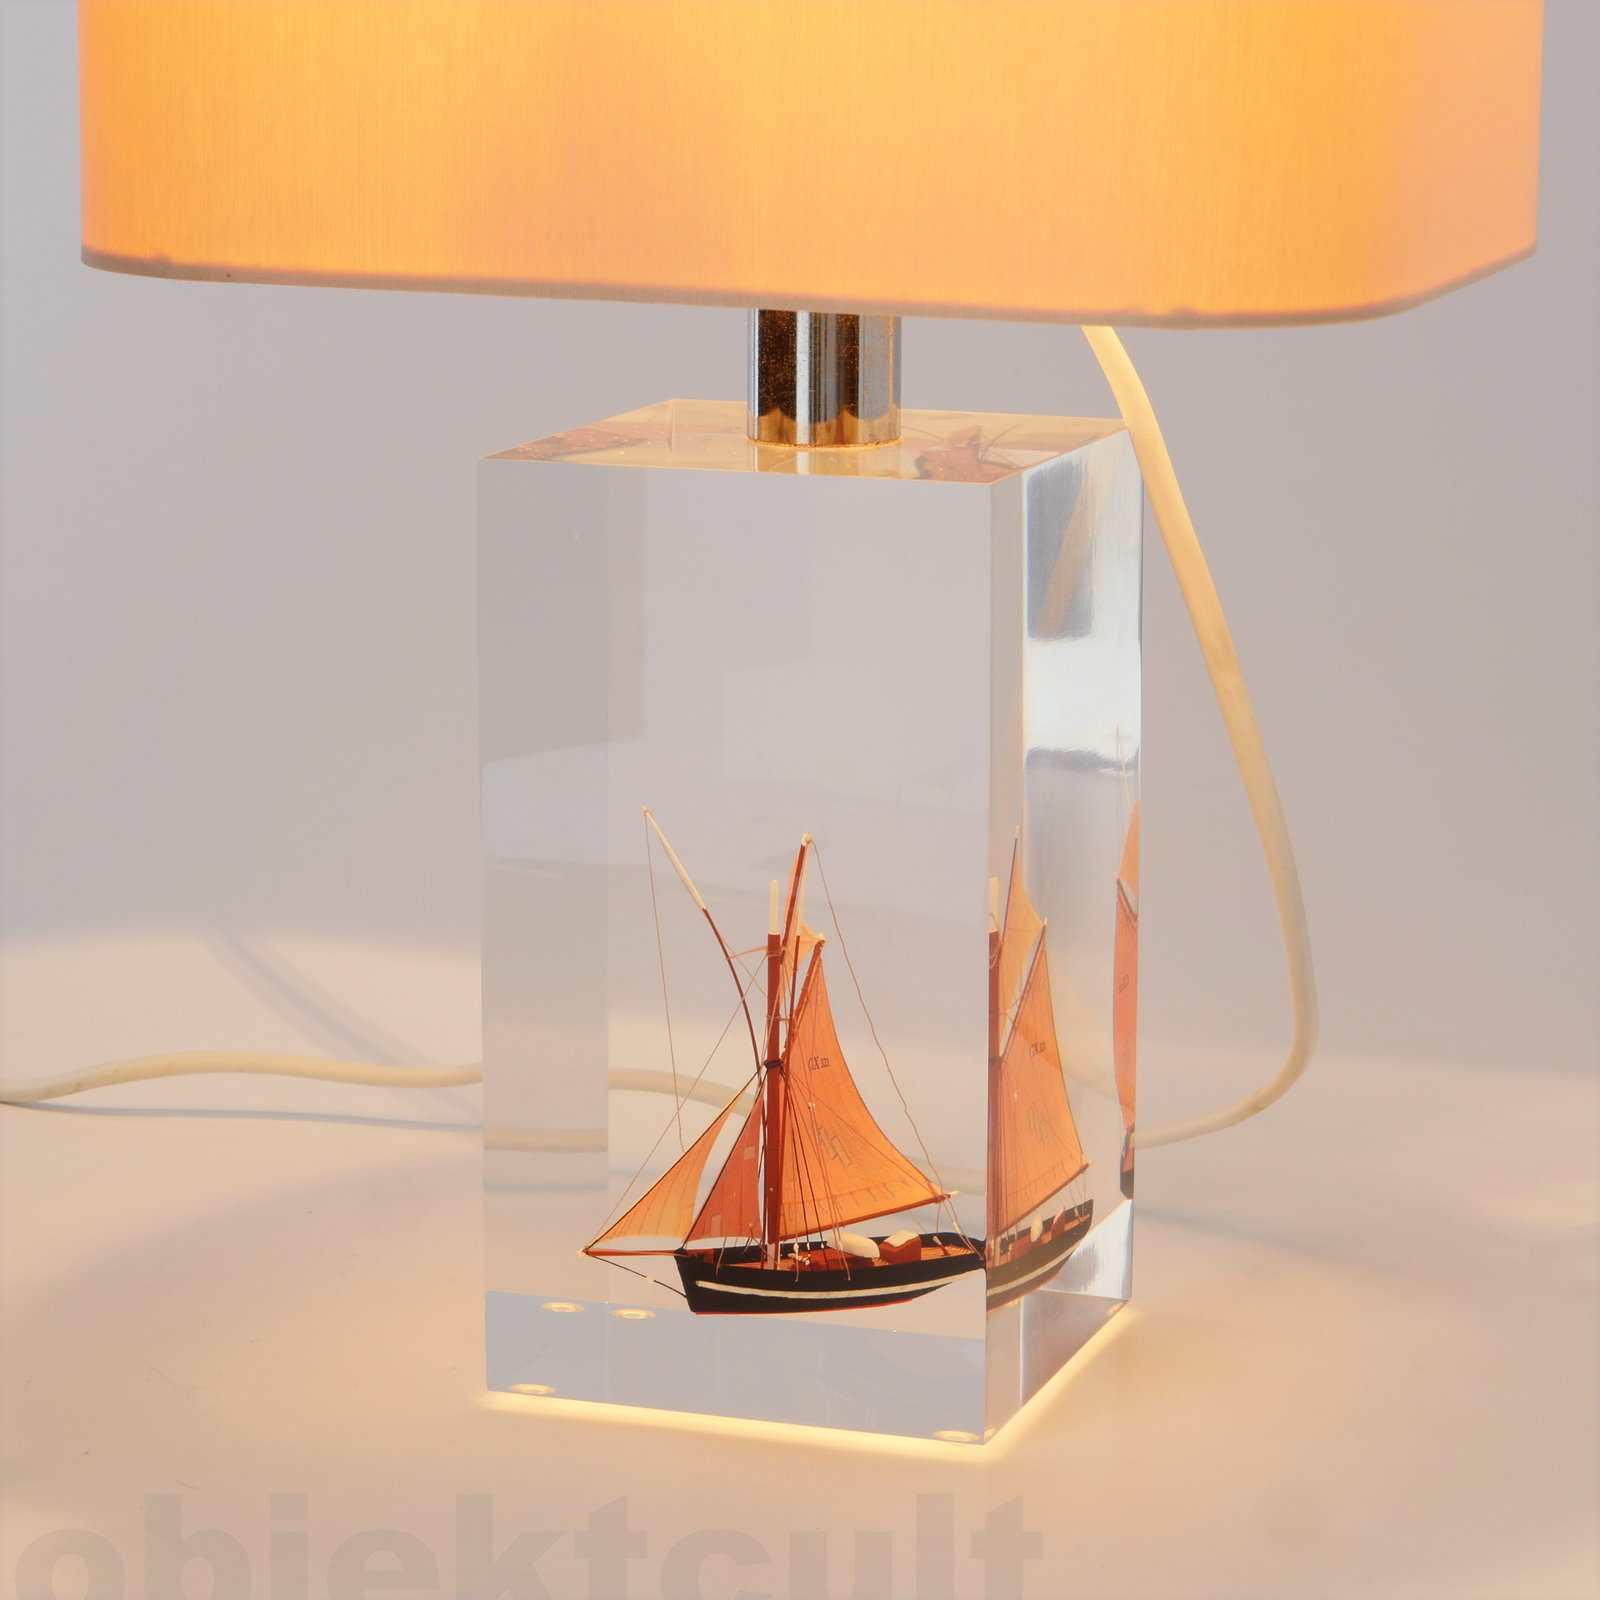 table light, Tischleuchte, manufacturer: Germany